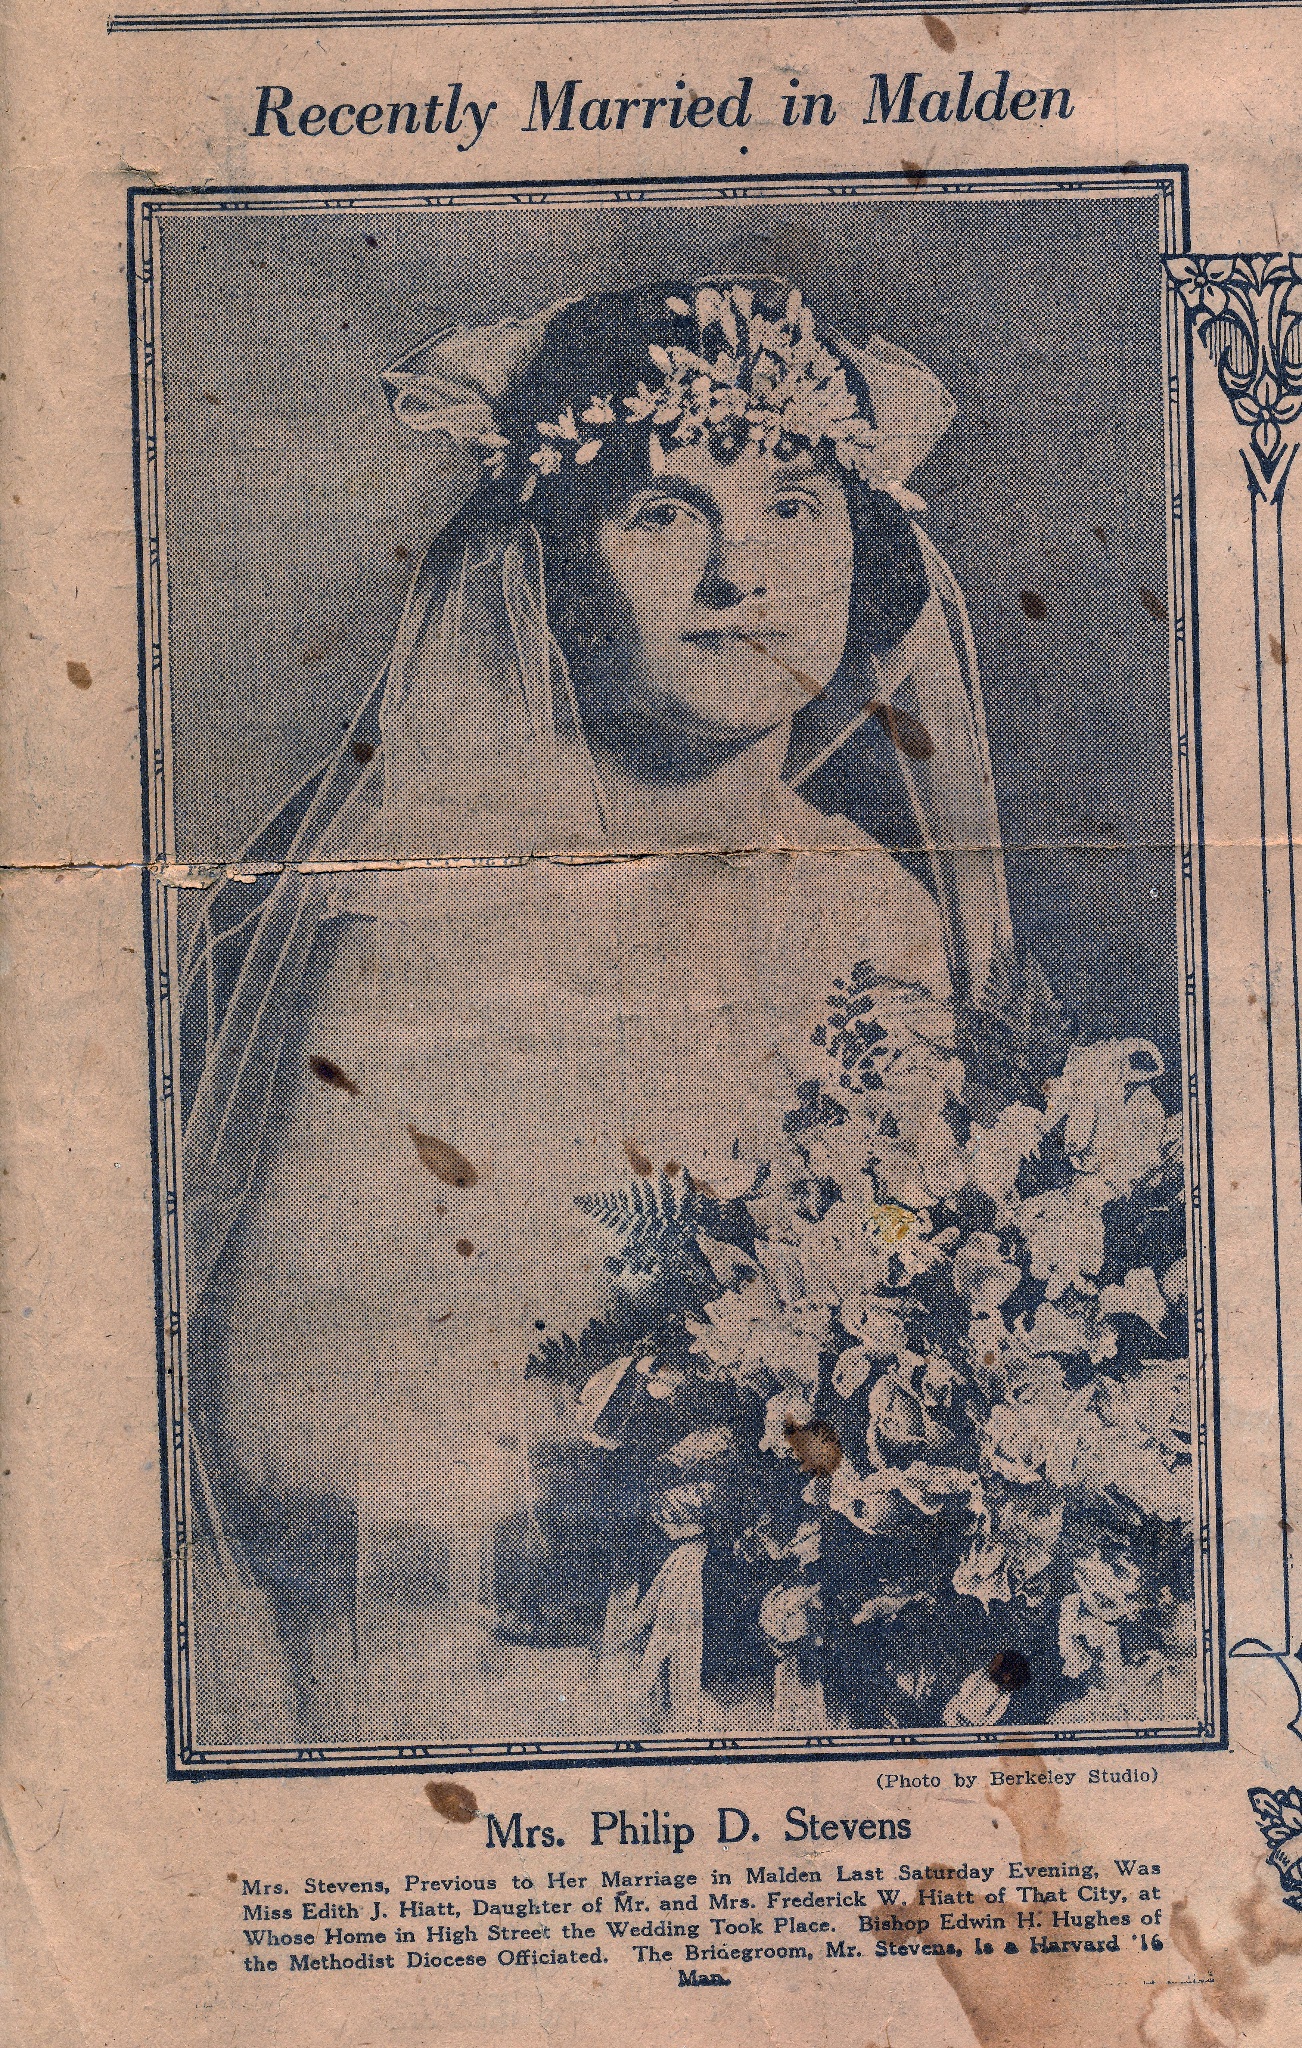 Edith Hiatt picture in paper